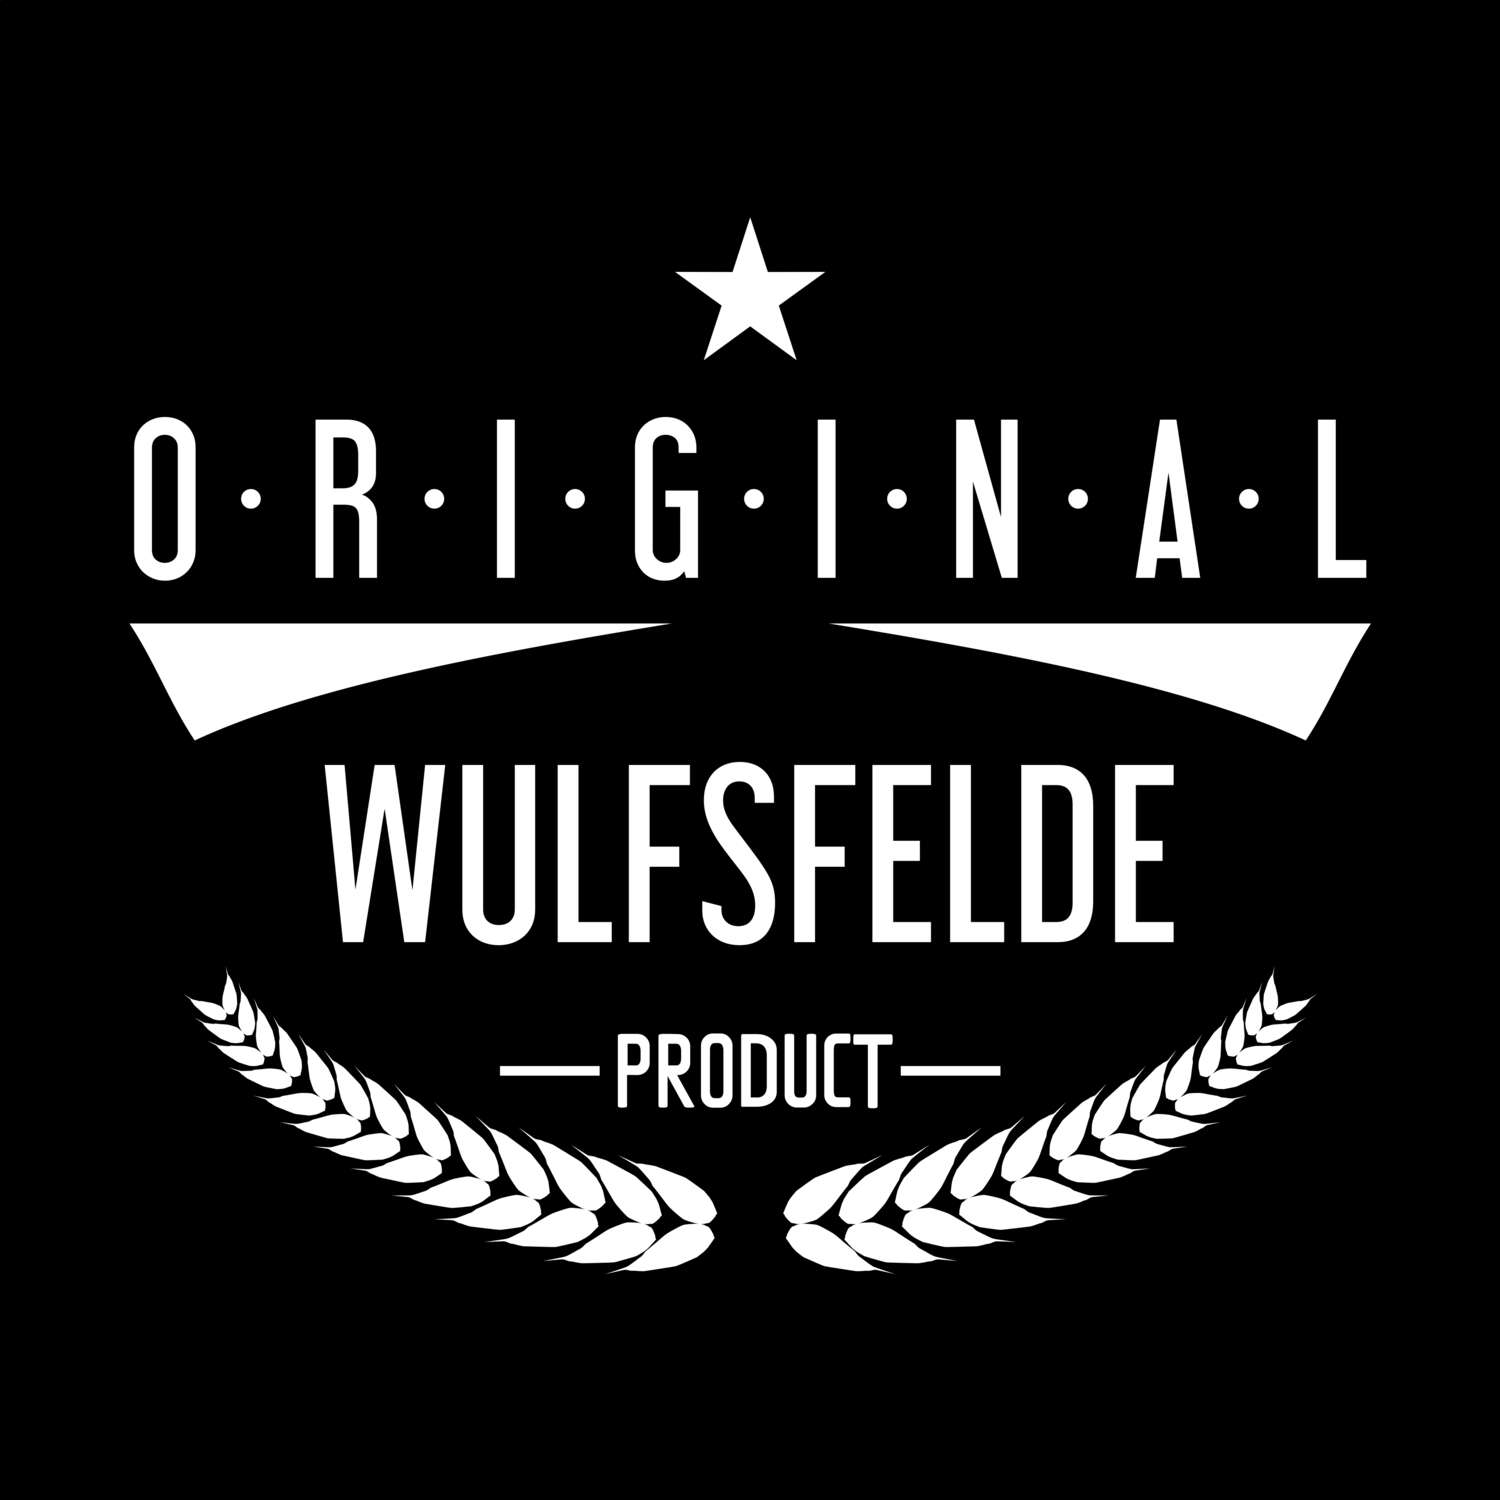 Wulfsfelde T-Shirt »Original Product«